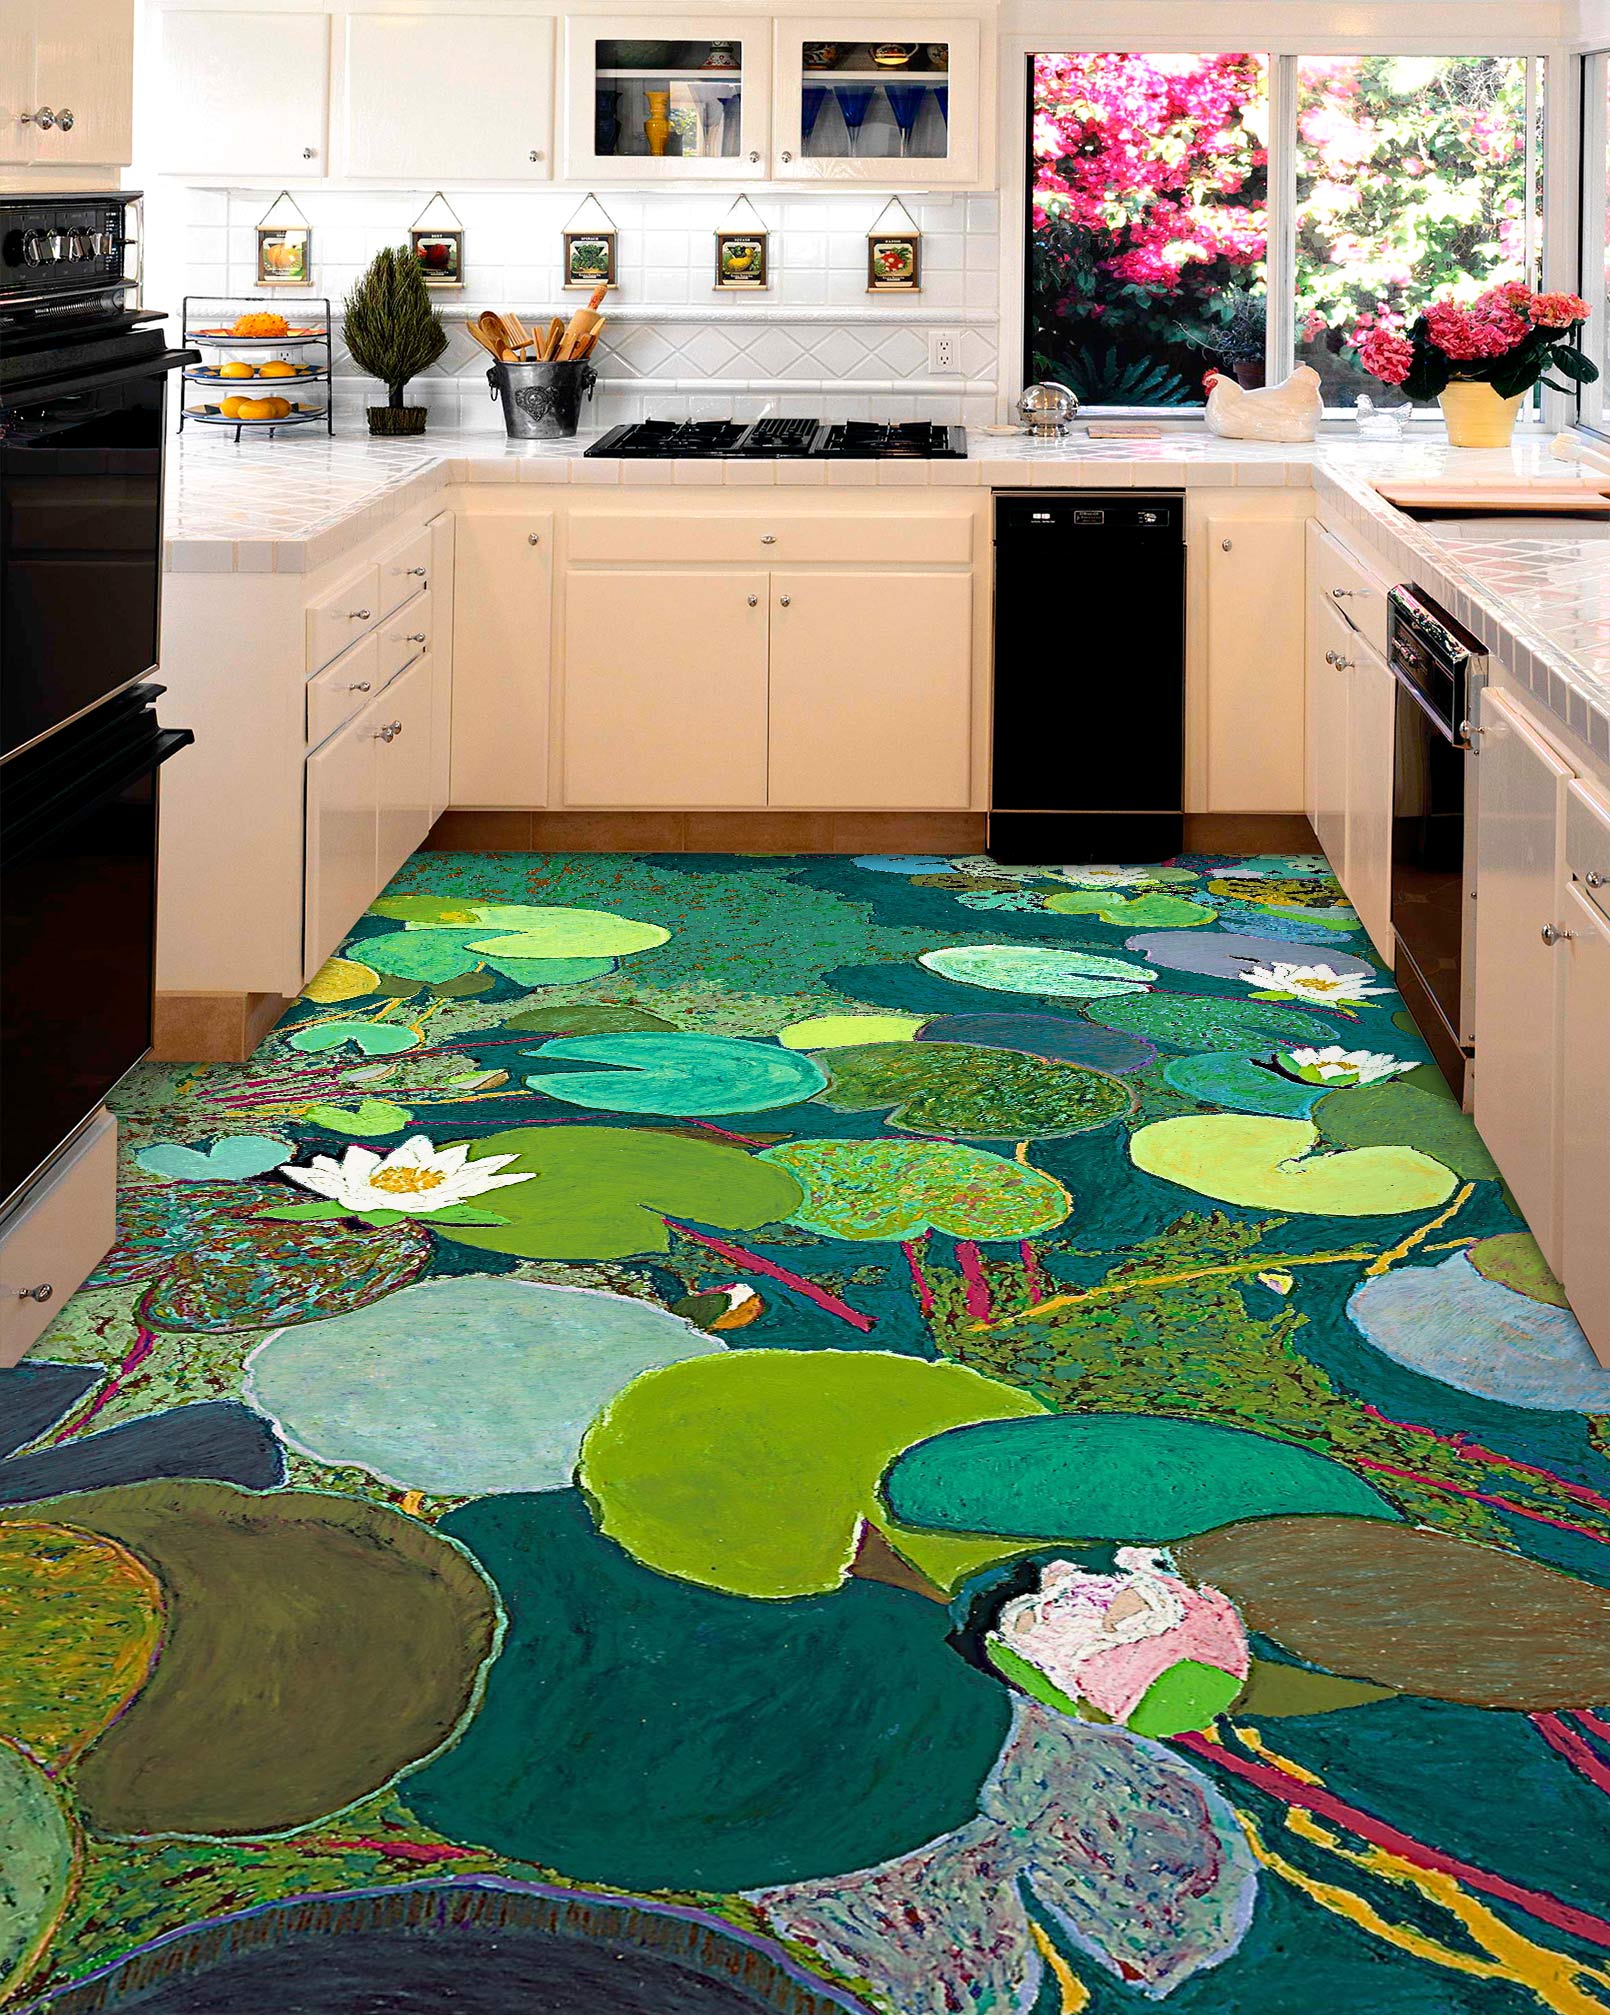 3D Lotus Leaf Pond Painting 96105 Allan P. Friedlander Floor Mural  Wallpaper Murals Self-Adhesive Removable Print Epoxy